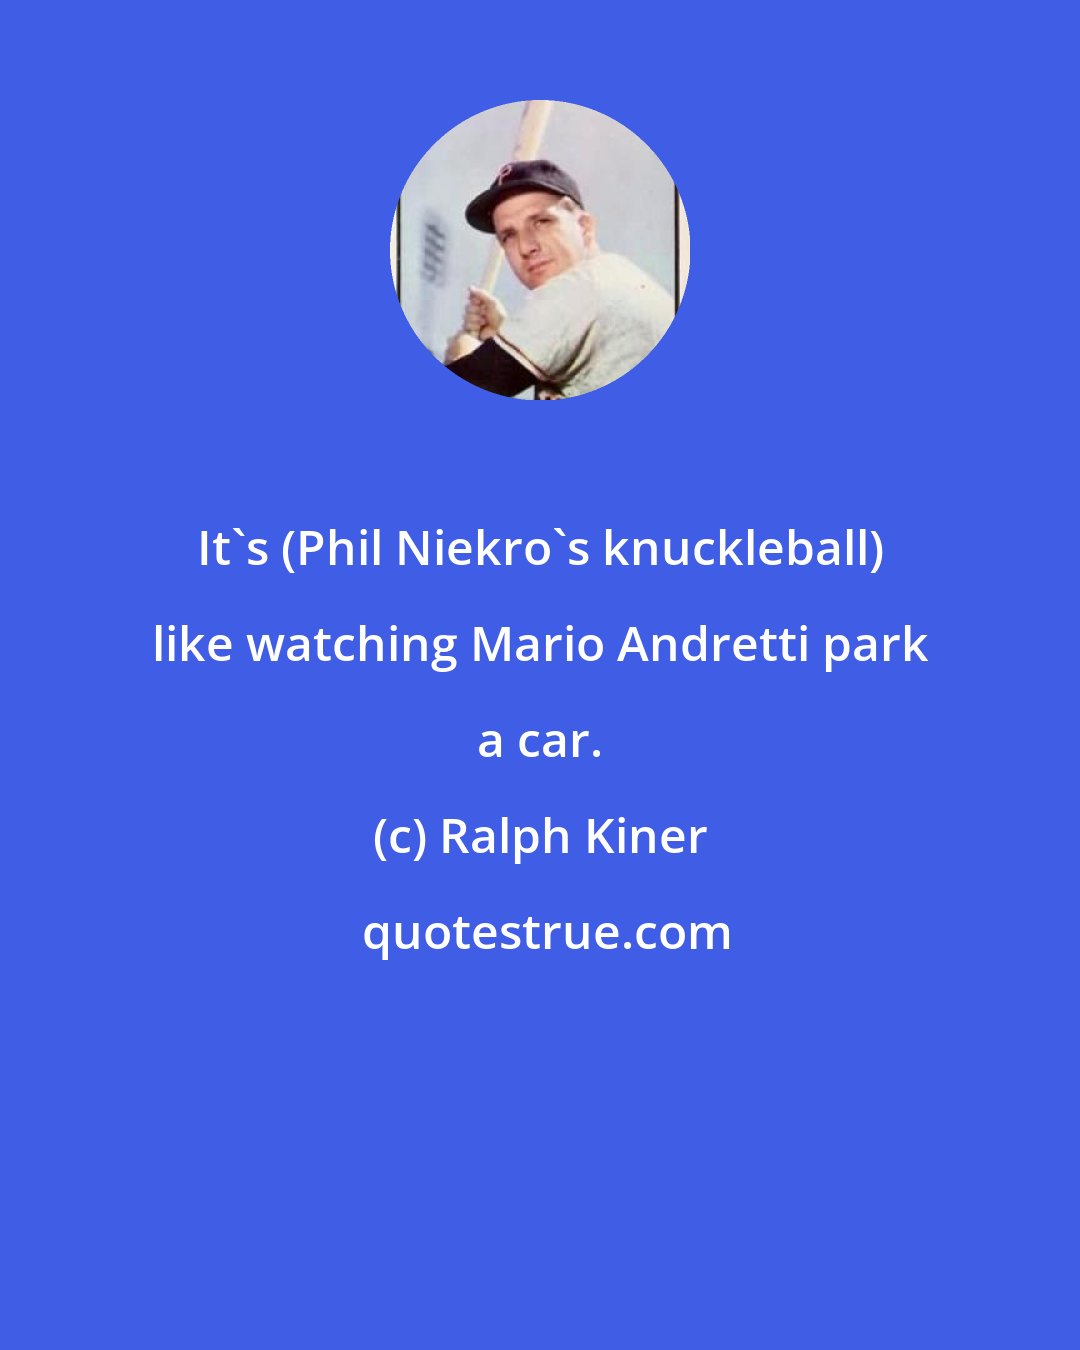 Ralph Kiner: It's (Phil Niekro's knuckleball) like watching Mario Andretti park a car.